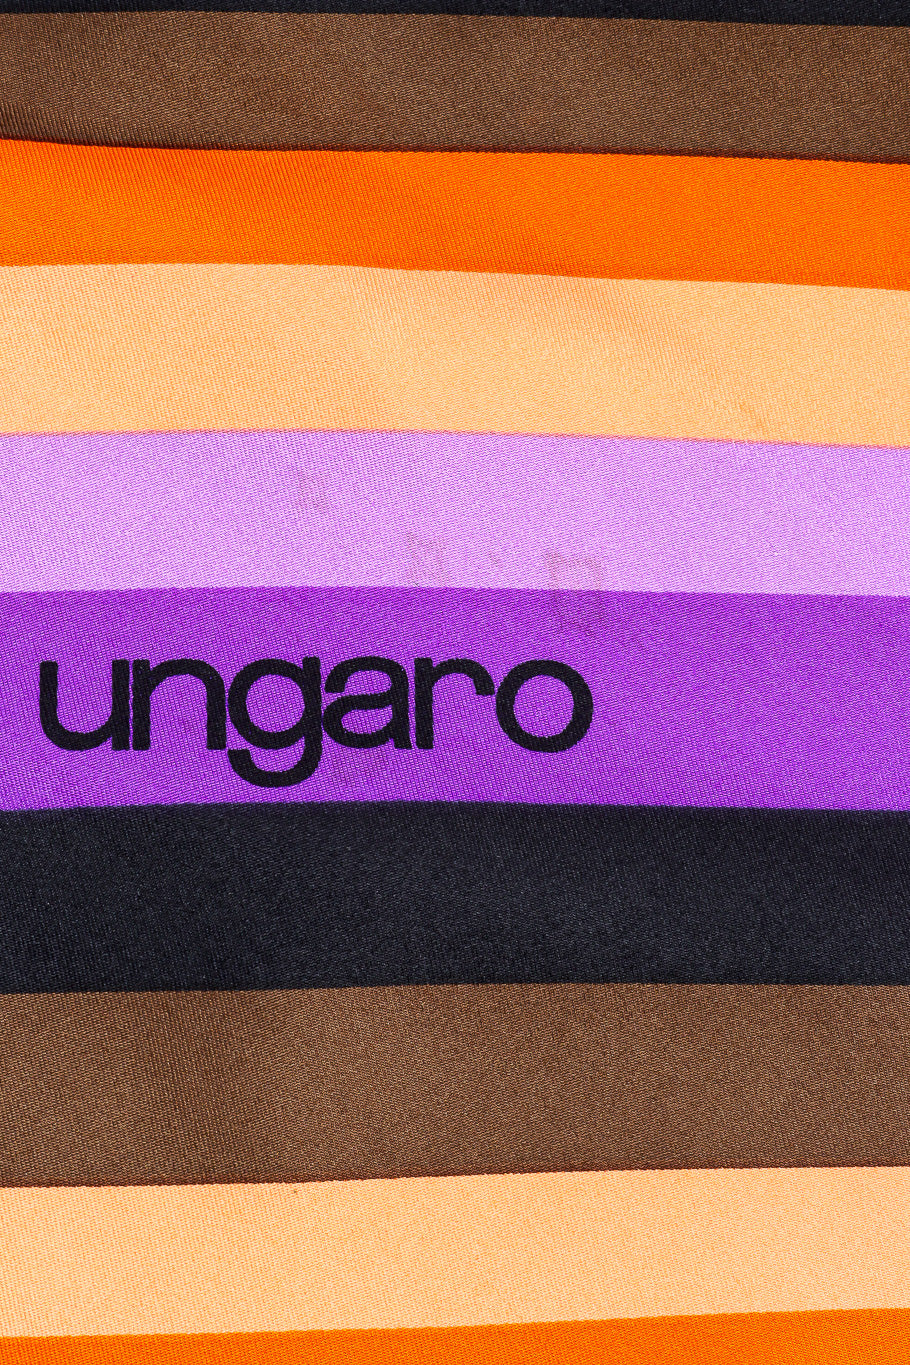 Color Block print scarf by Emanuel Ungaro stain close-up @recessla